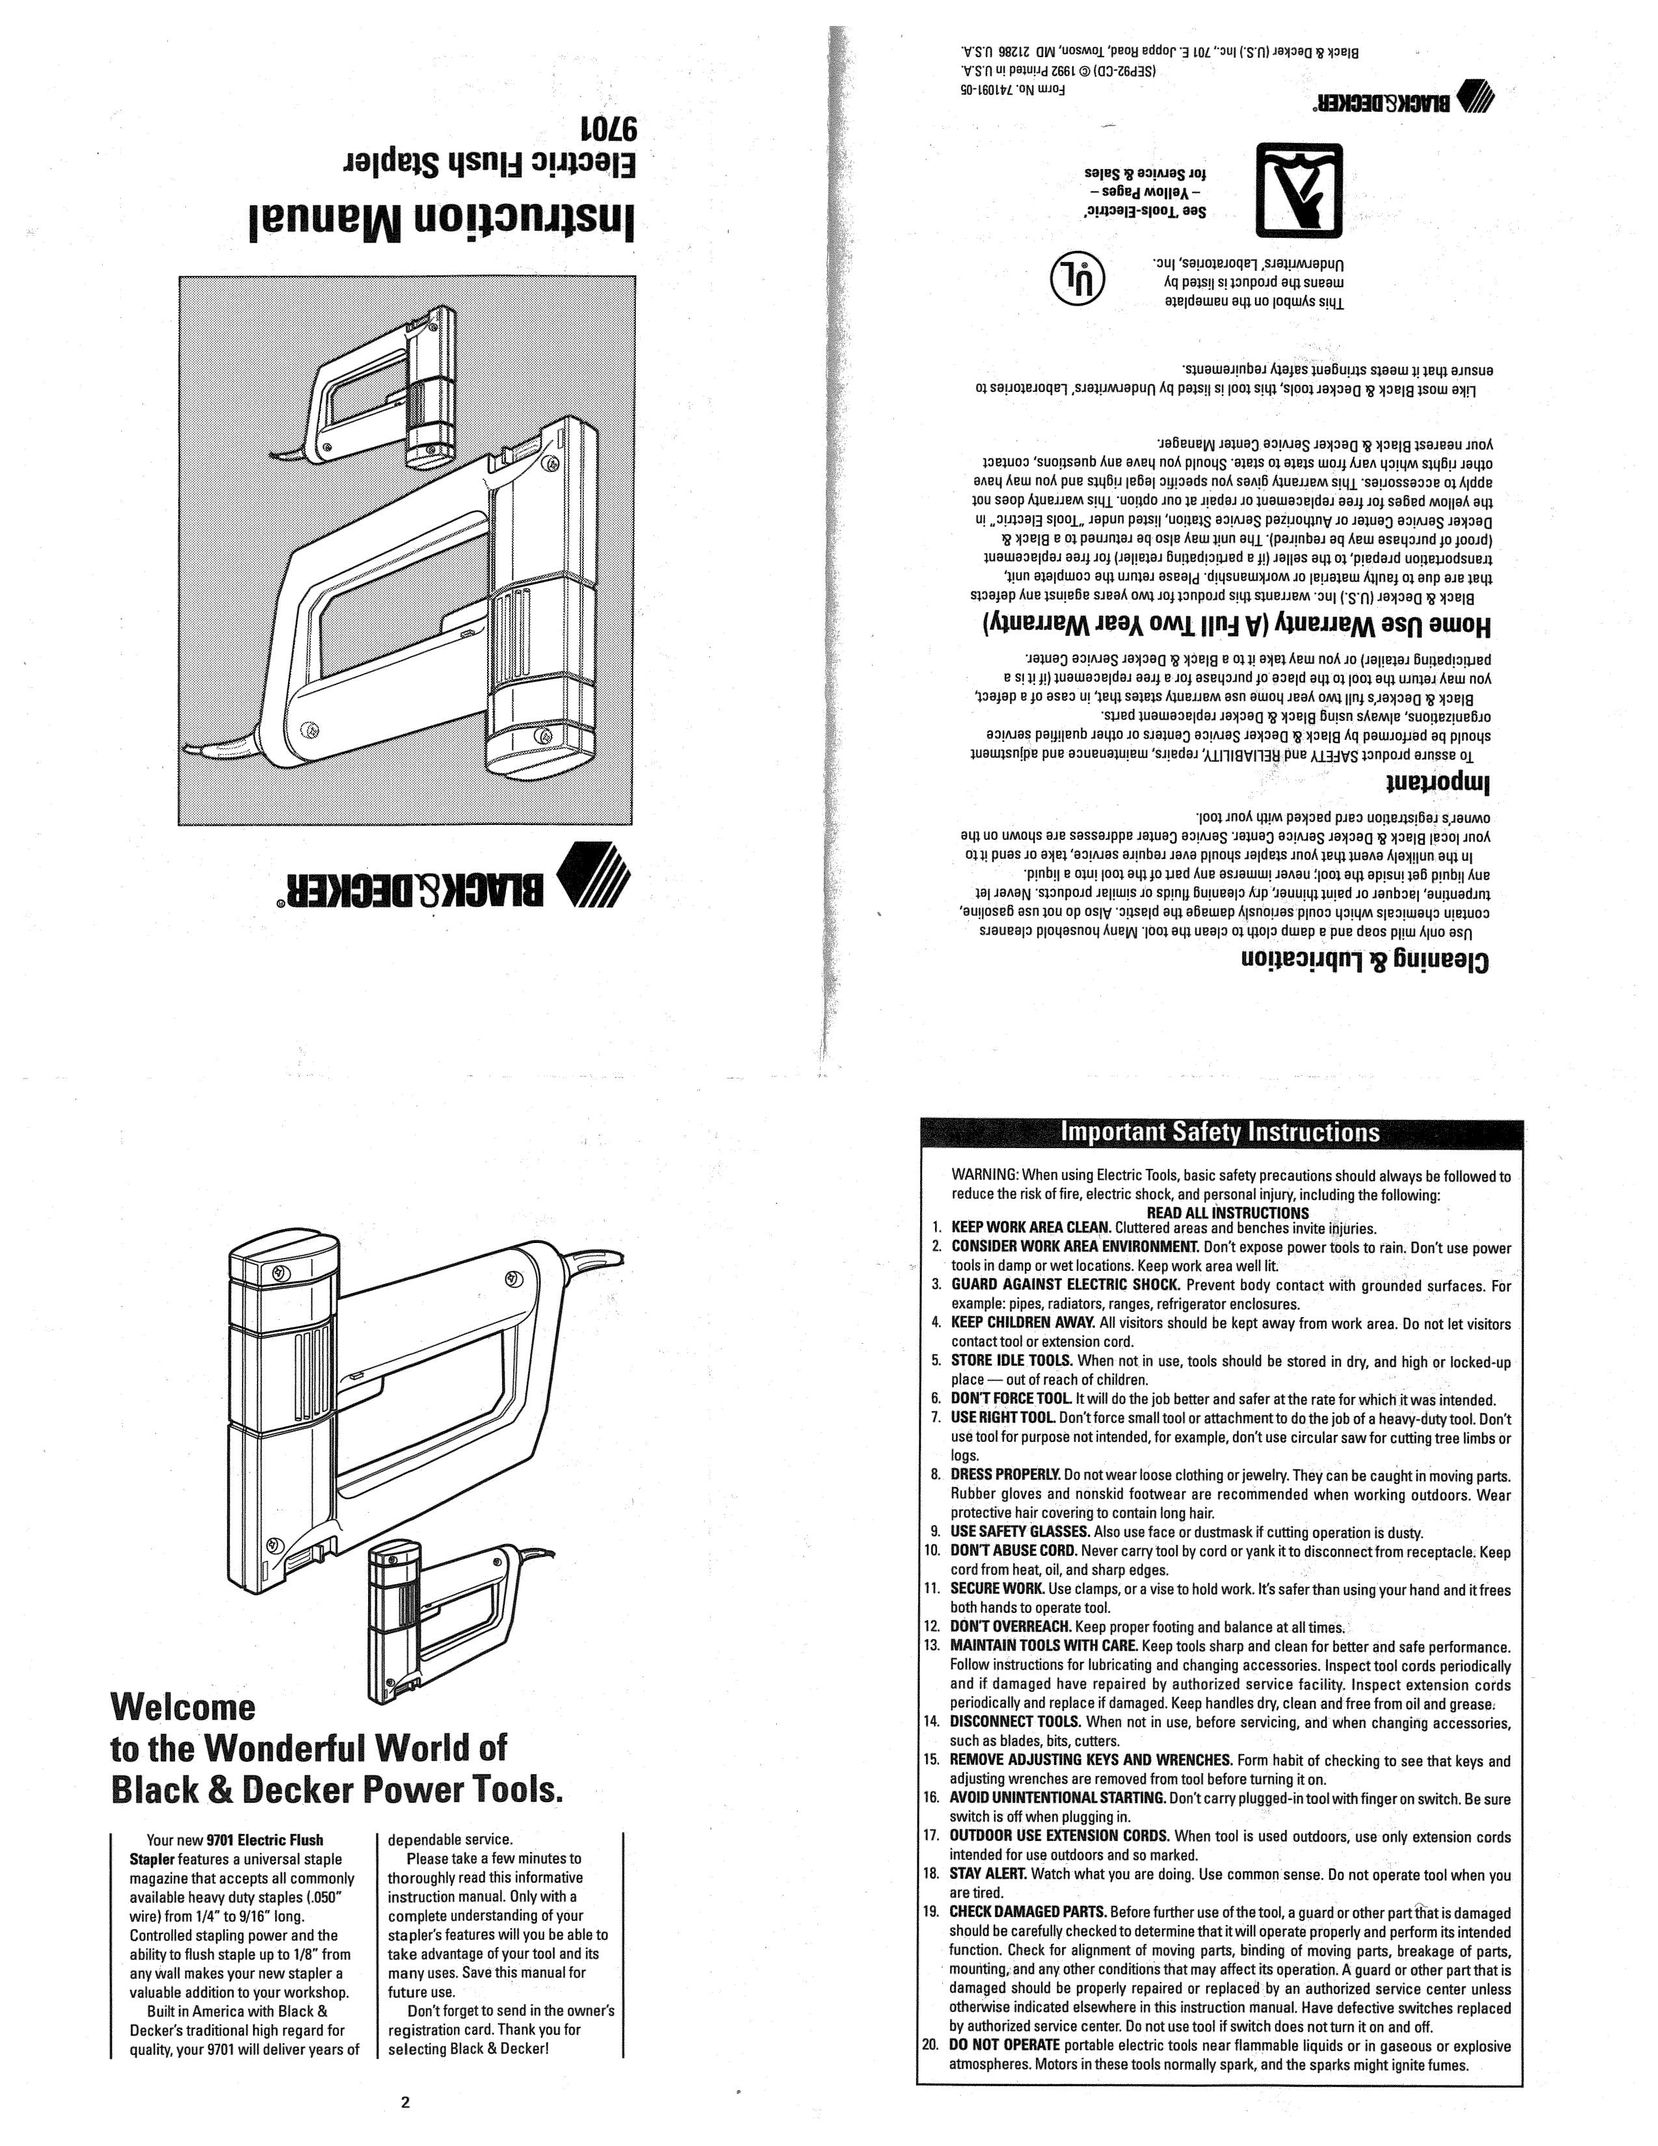 Black & Decker 9701 Staple Gun User Manual